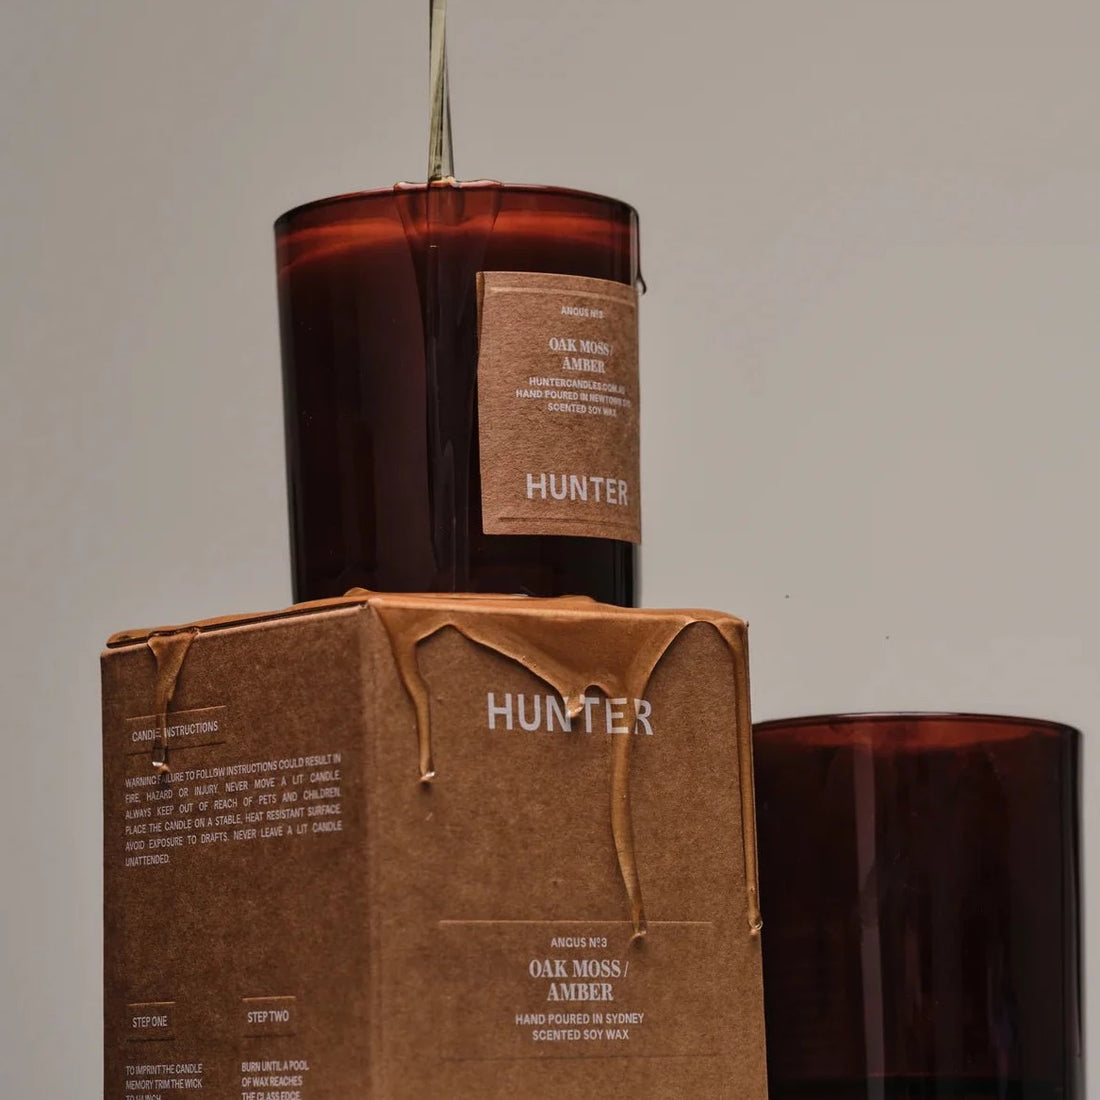 Hunter Candles - Angus, Oak Moss + Amber - The Flower Crate